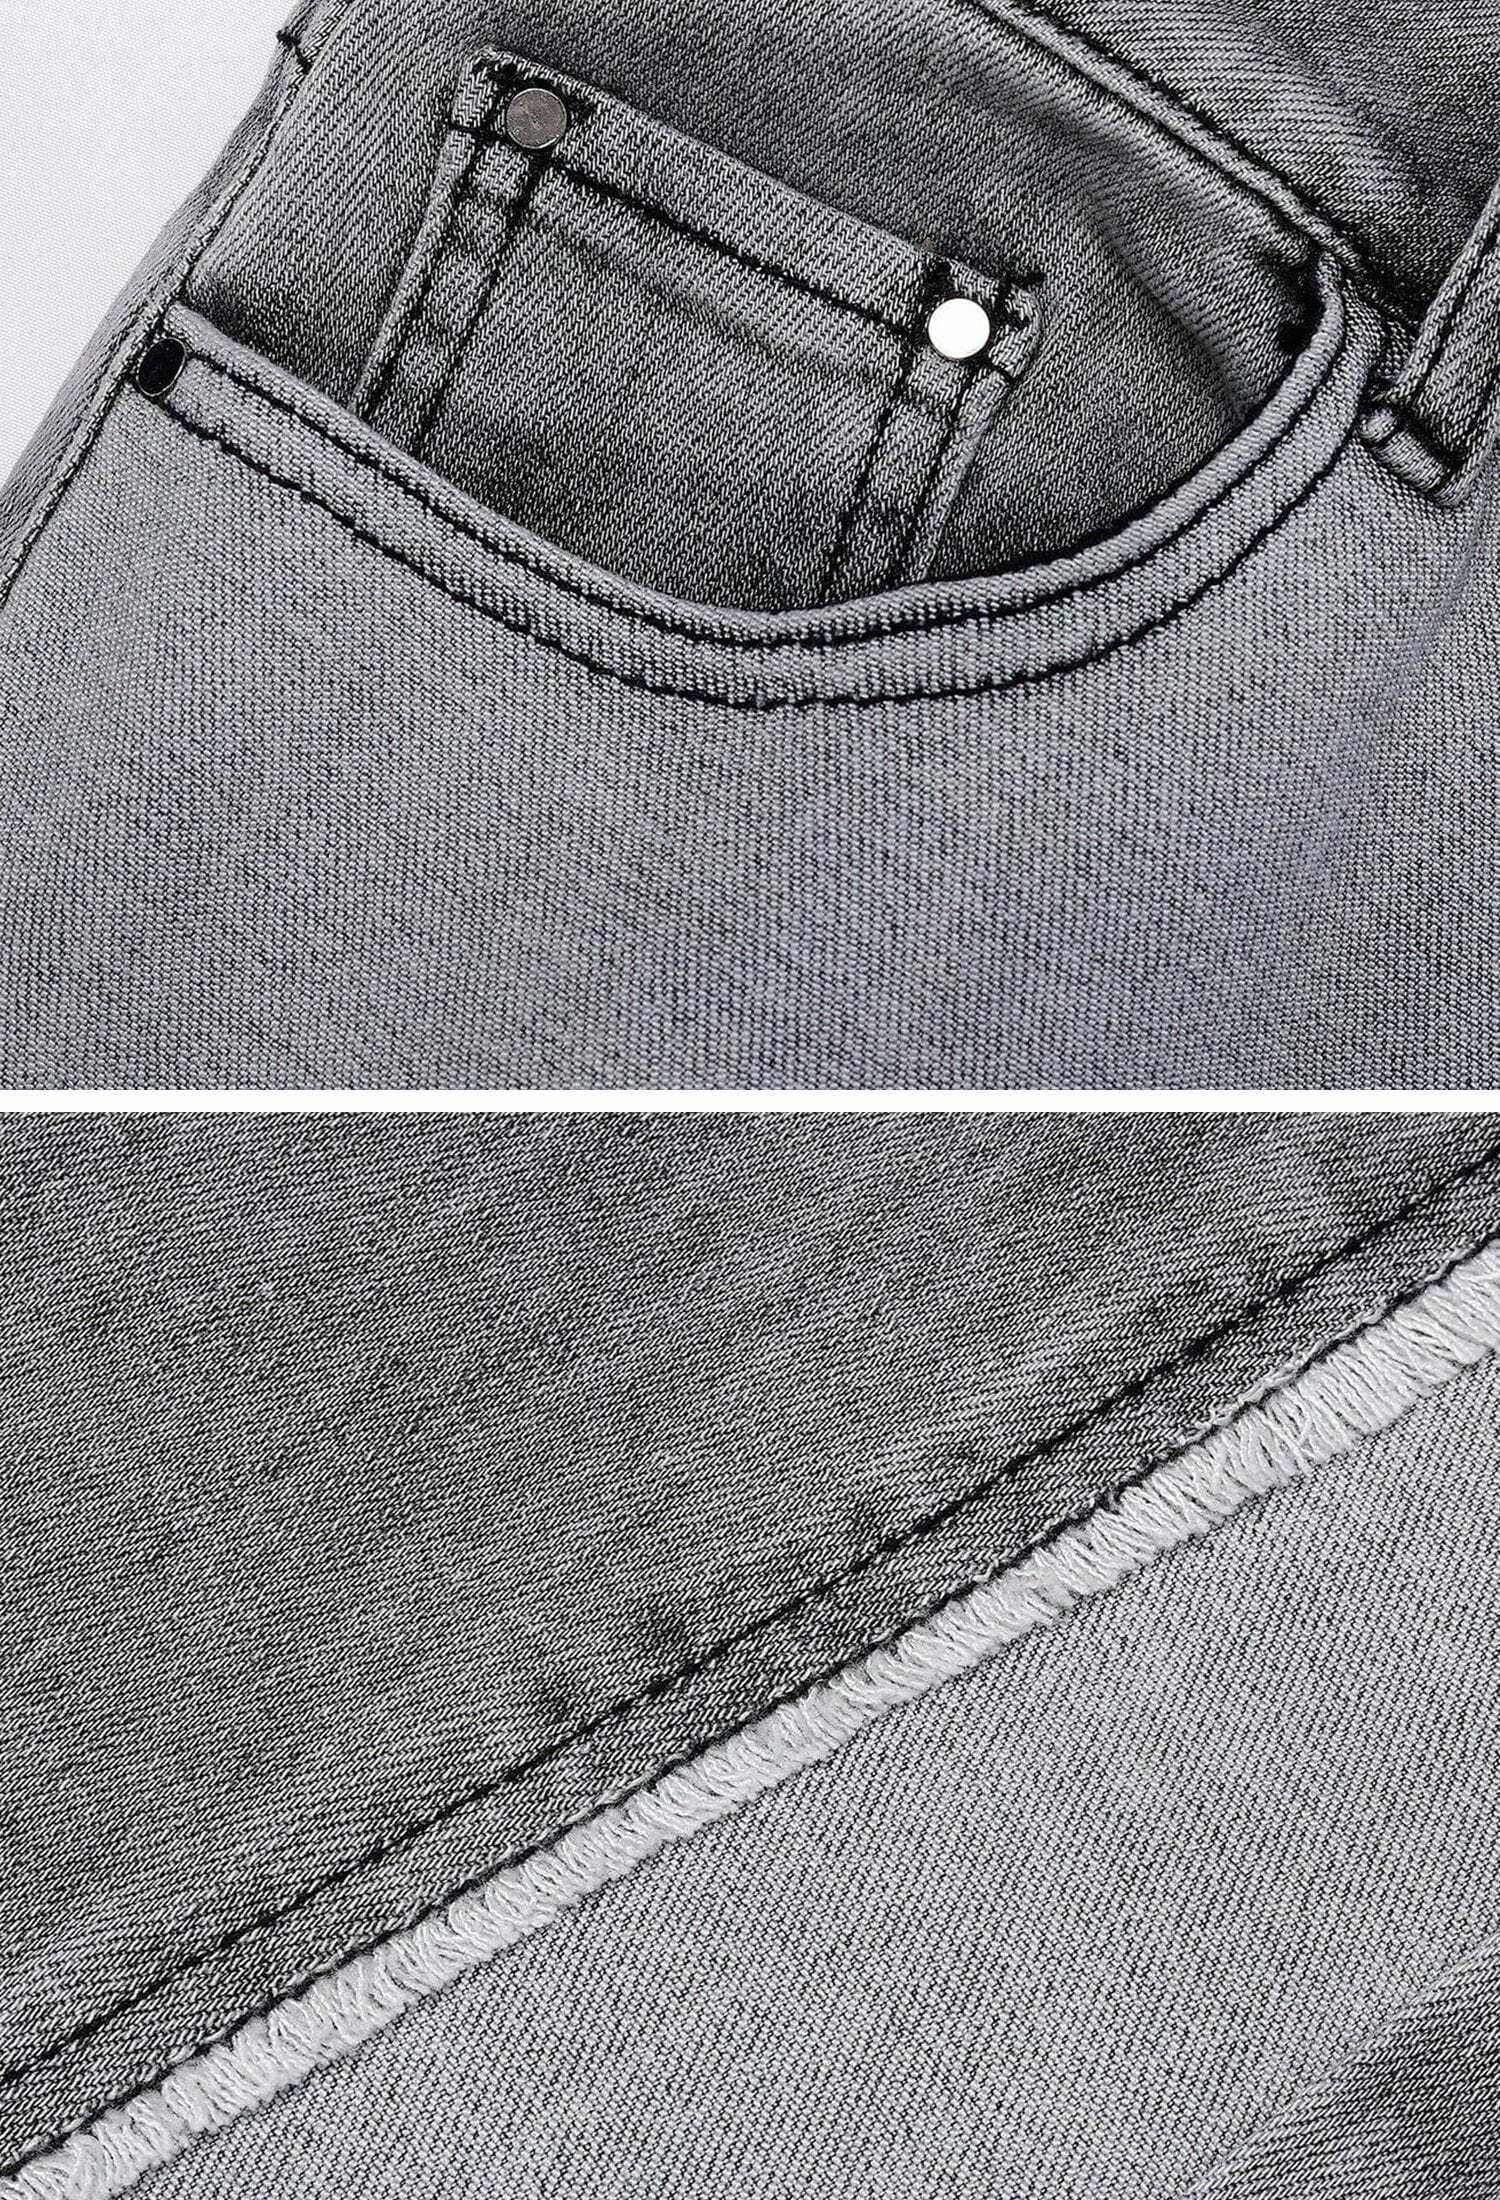 revolutionary patchwork jeans edgy & sleek streetwear 7653